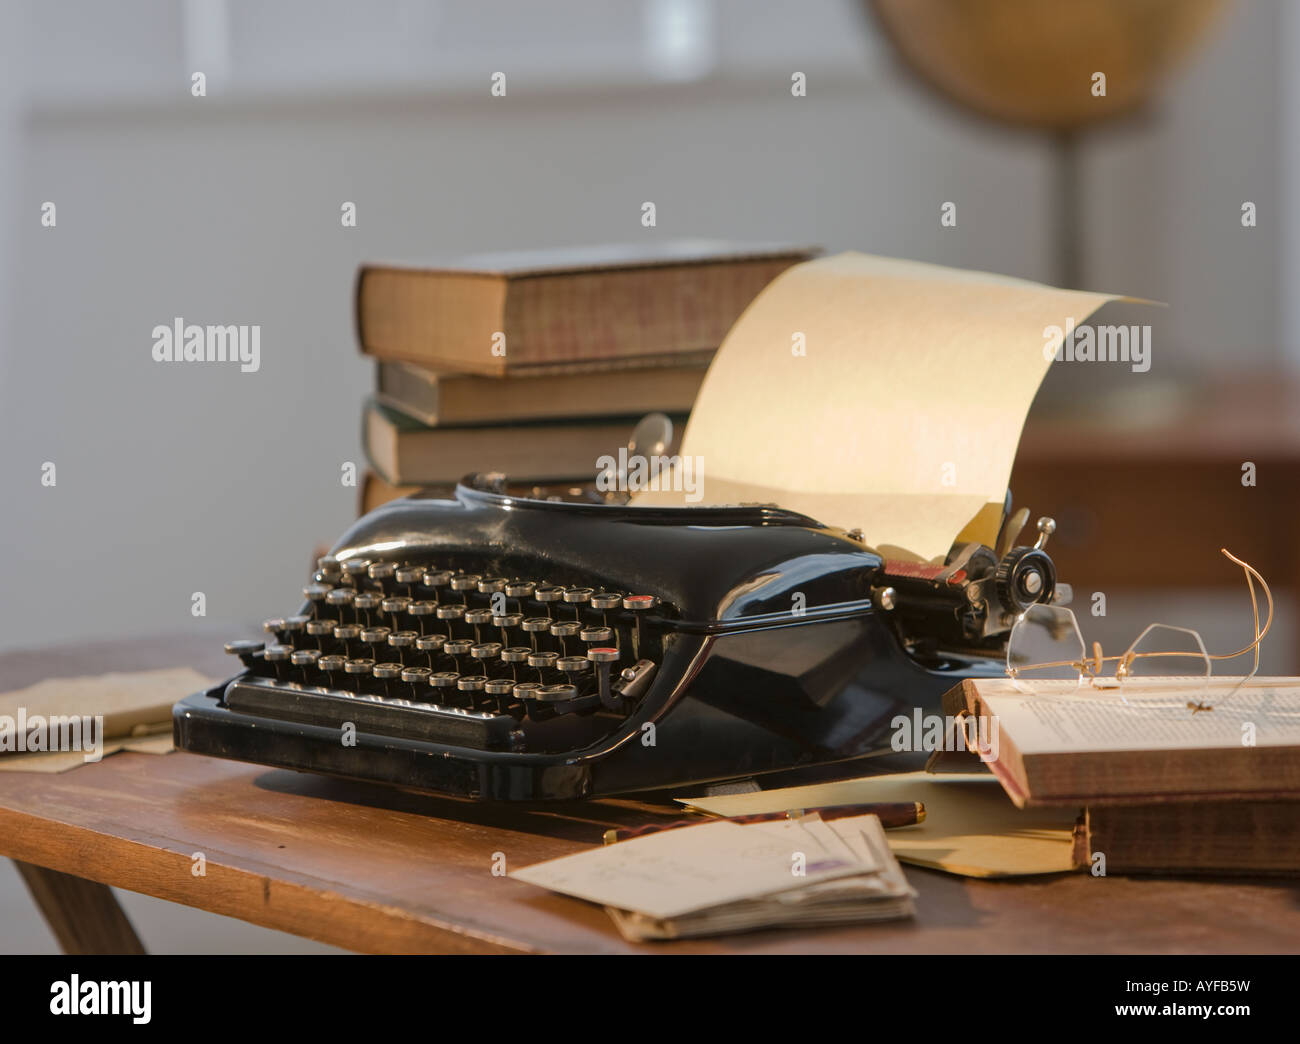 Antique typewriter on table Stock Photo